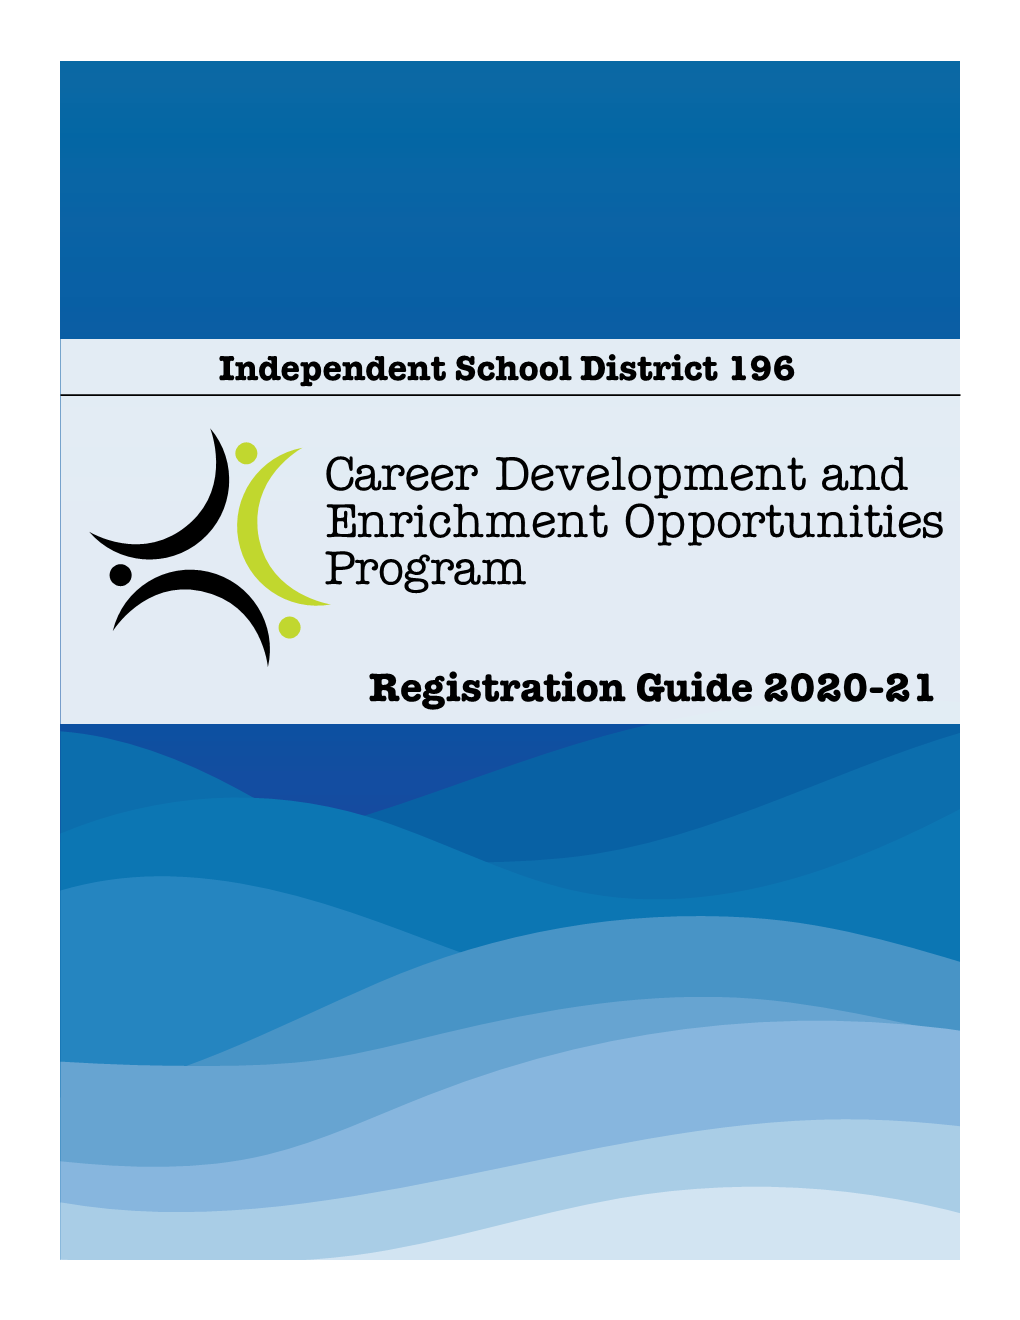 Career Development and Enrichment Opportunities Program